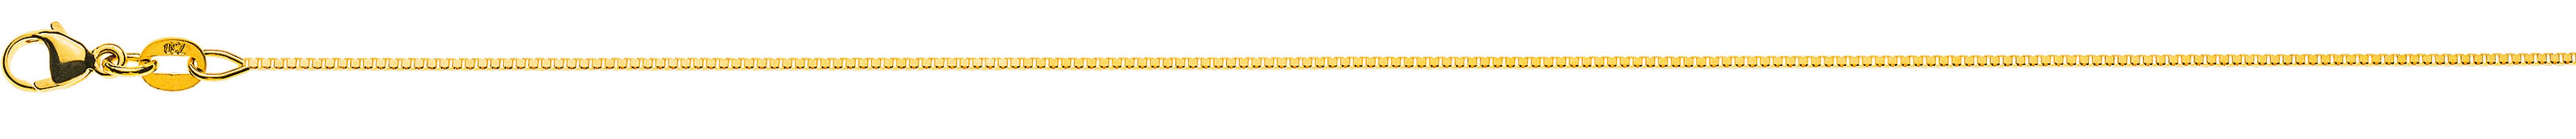 AURONOS Prestige Necklace yellow gold 18K Venetian chain diamond 38cm 0.8mm